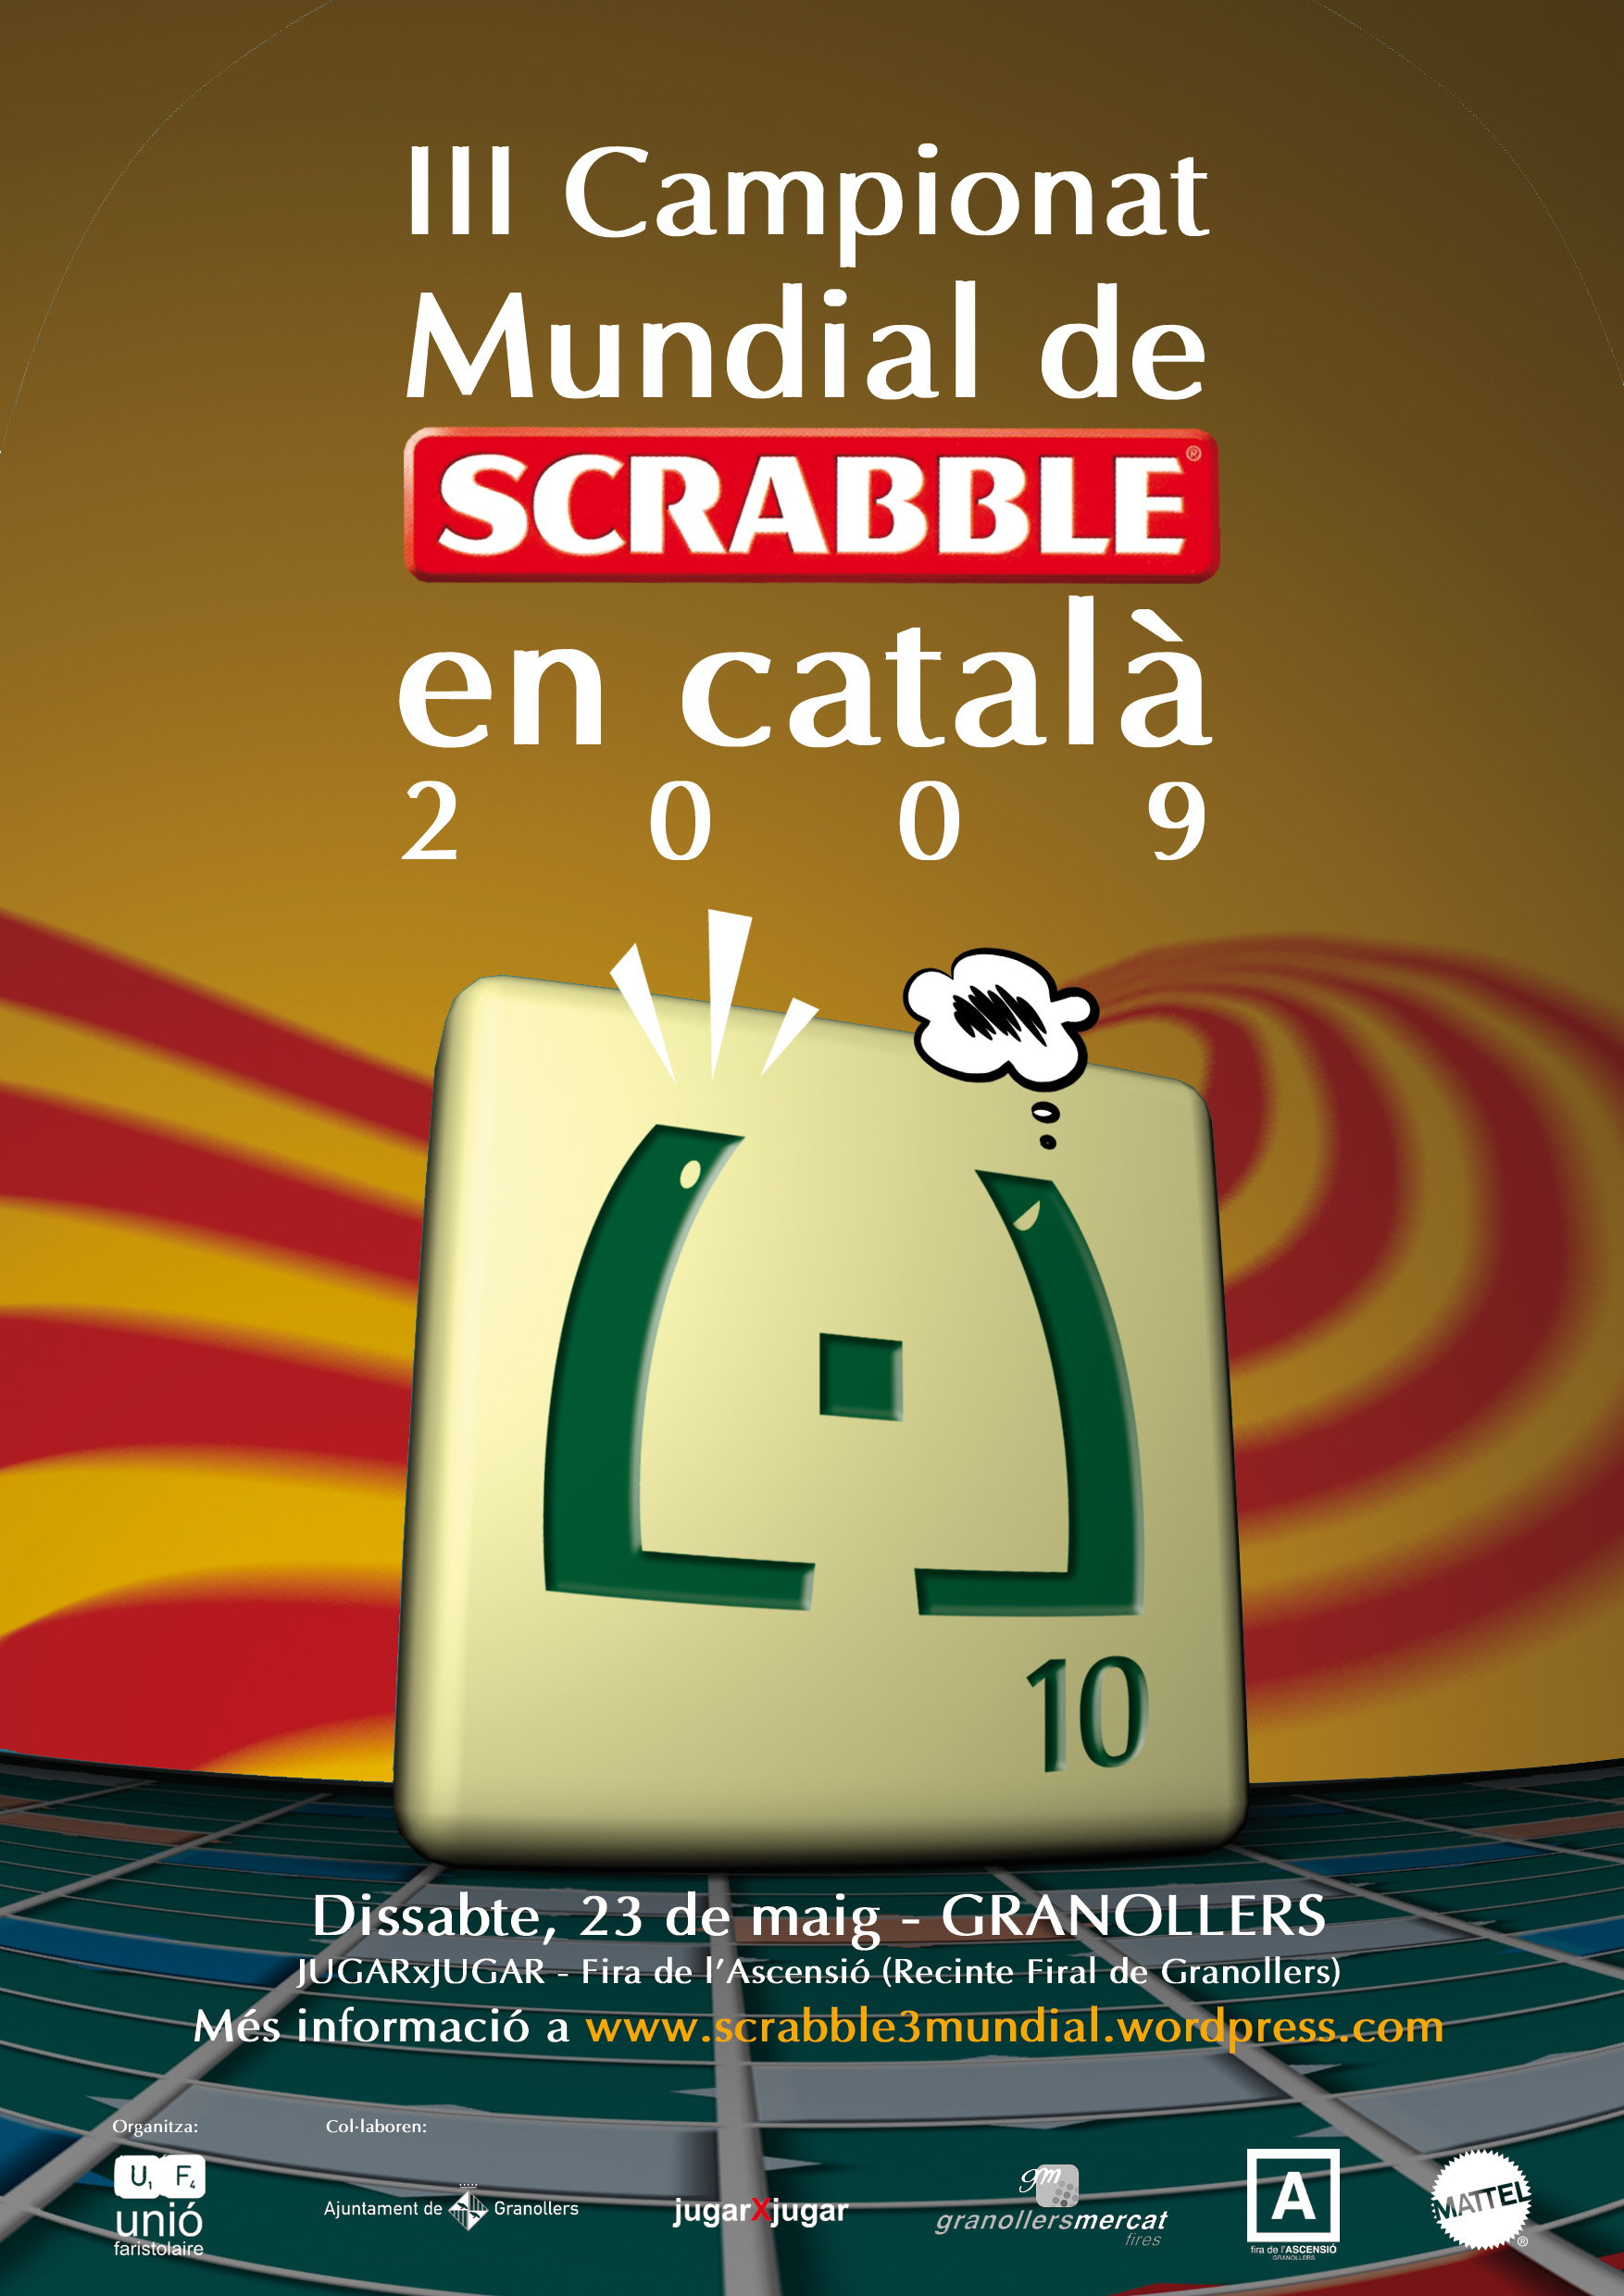 (c) Scrabble3mundial.wordpress.com